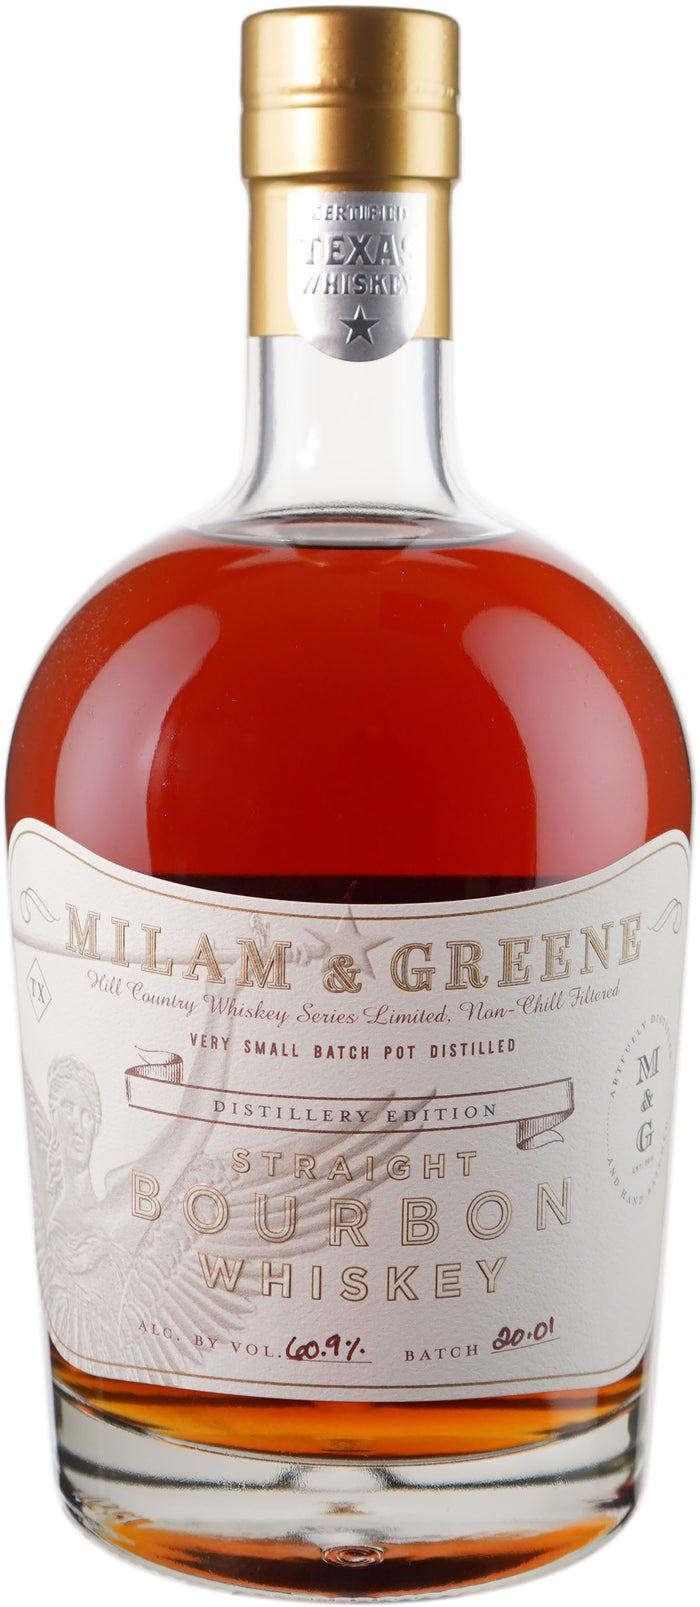 Milam & Greene Distillery Edition Straight Bourbon Whiskey